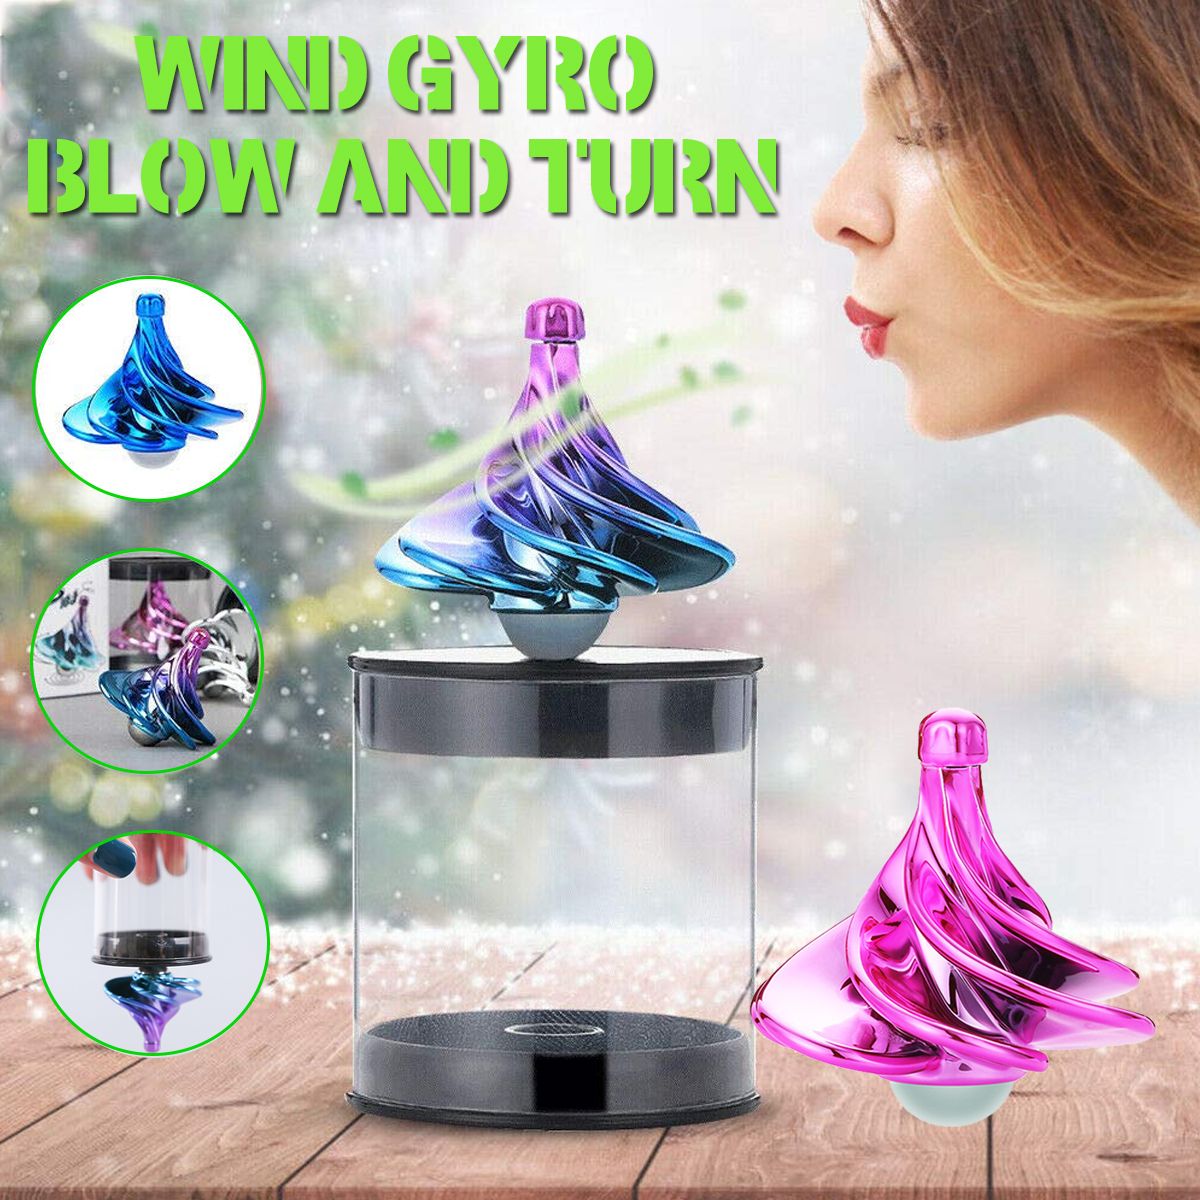 Wind-Fidget-Gyro-Spinning-Finger-Gyroscope-Game-Wind-Gyro-Blow-And-Turn-Anti-Stress-Gadget-Hand-Fun--1610035